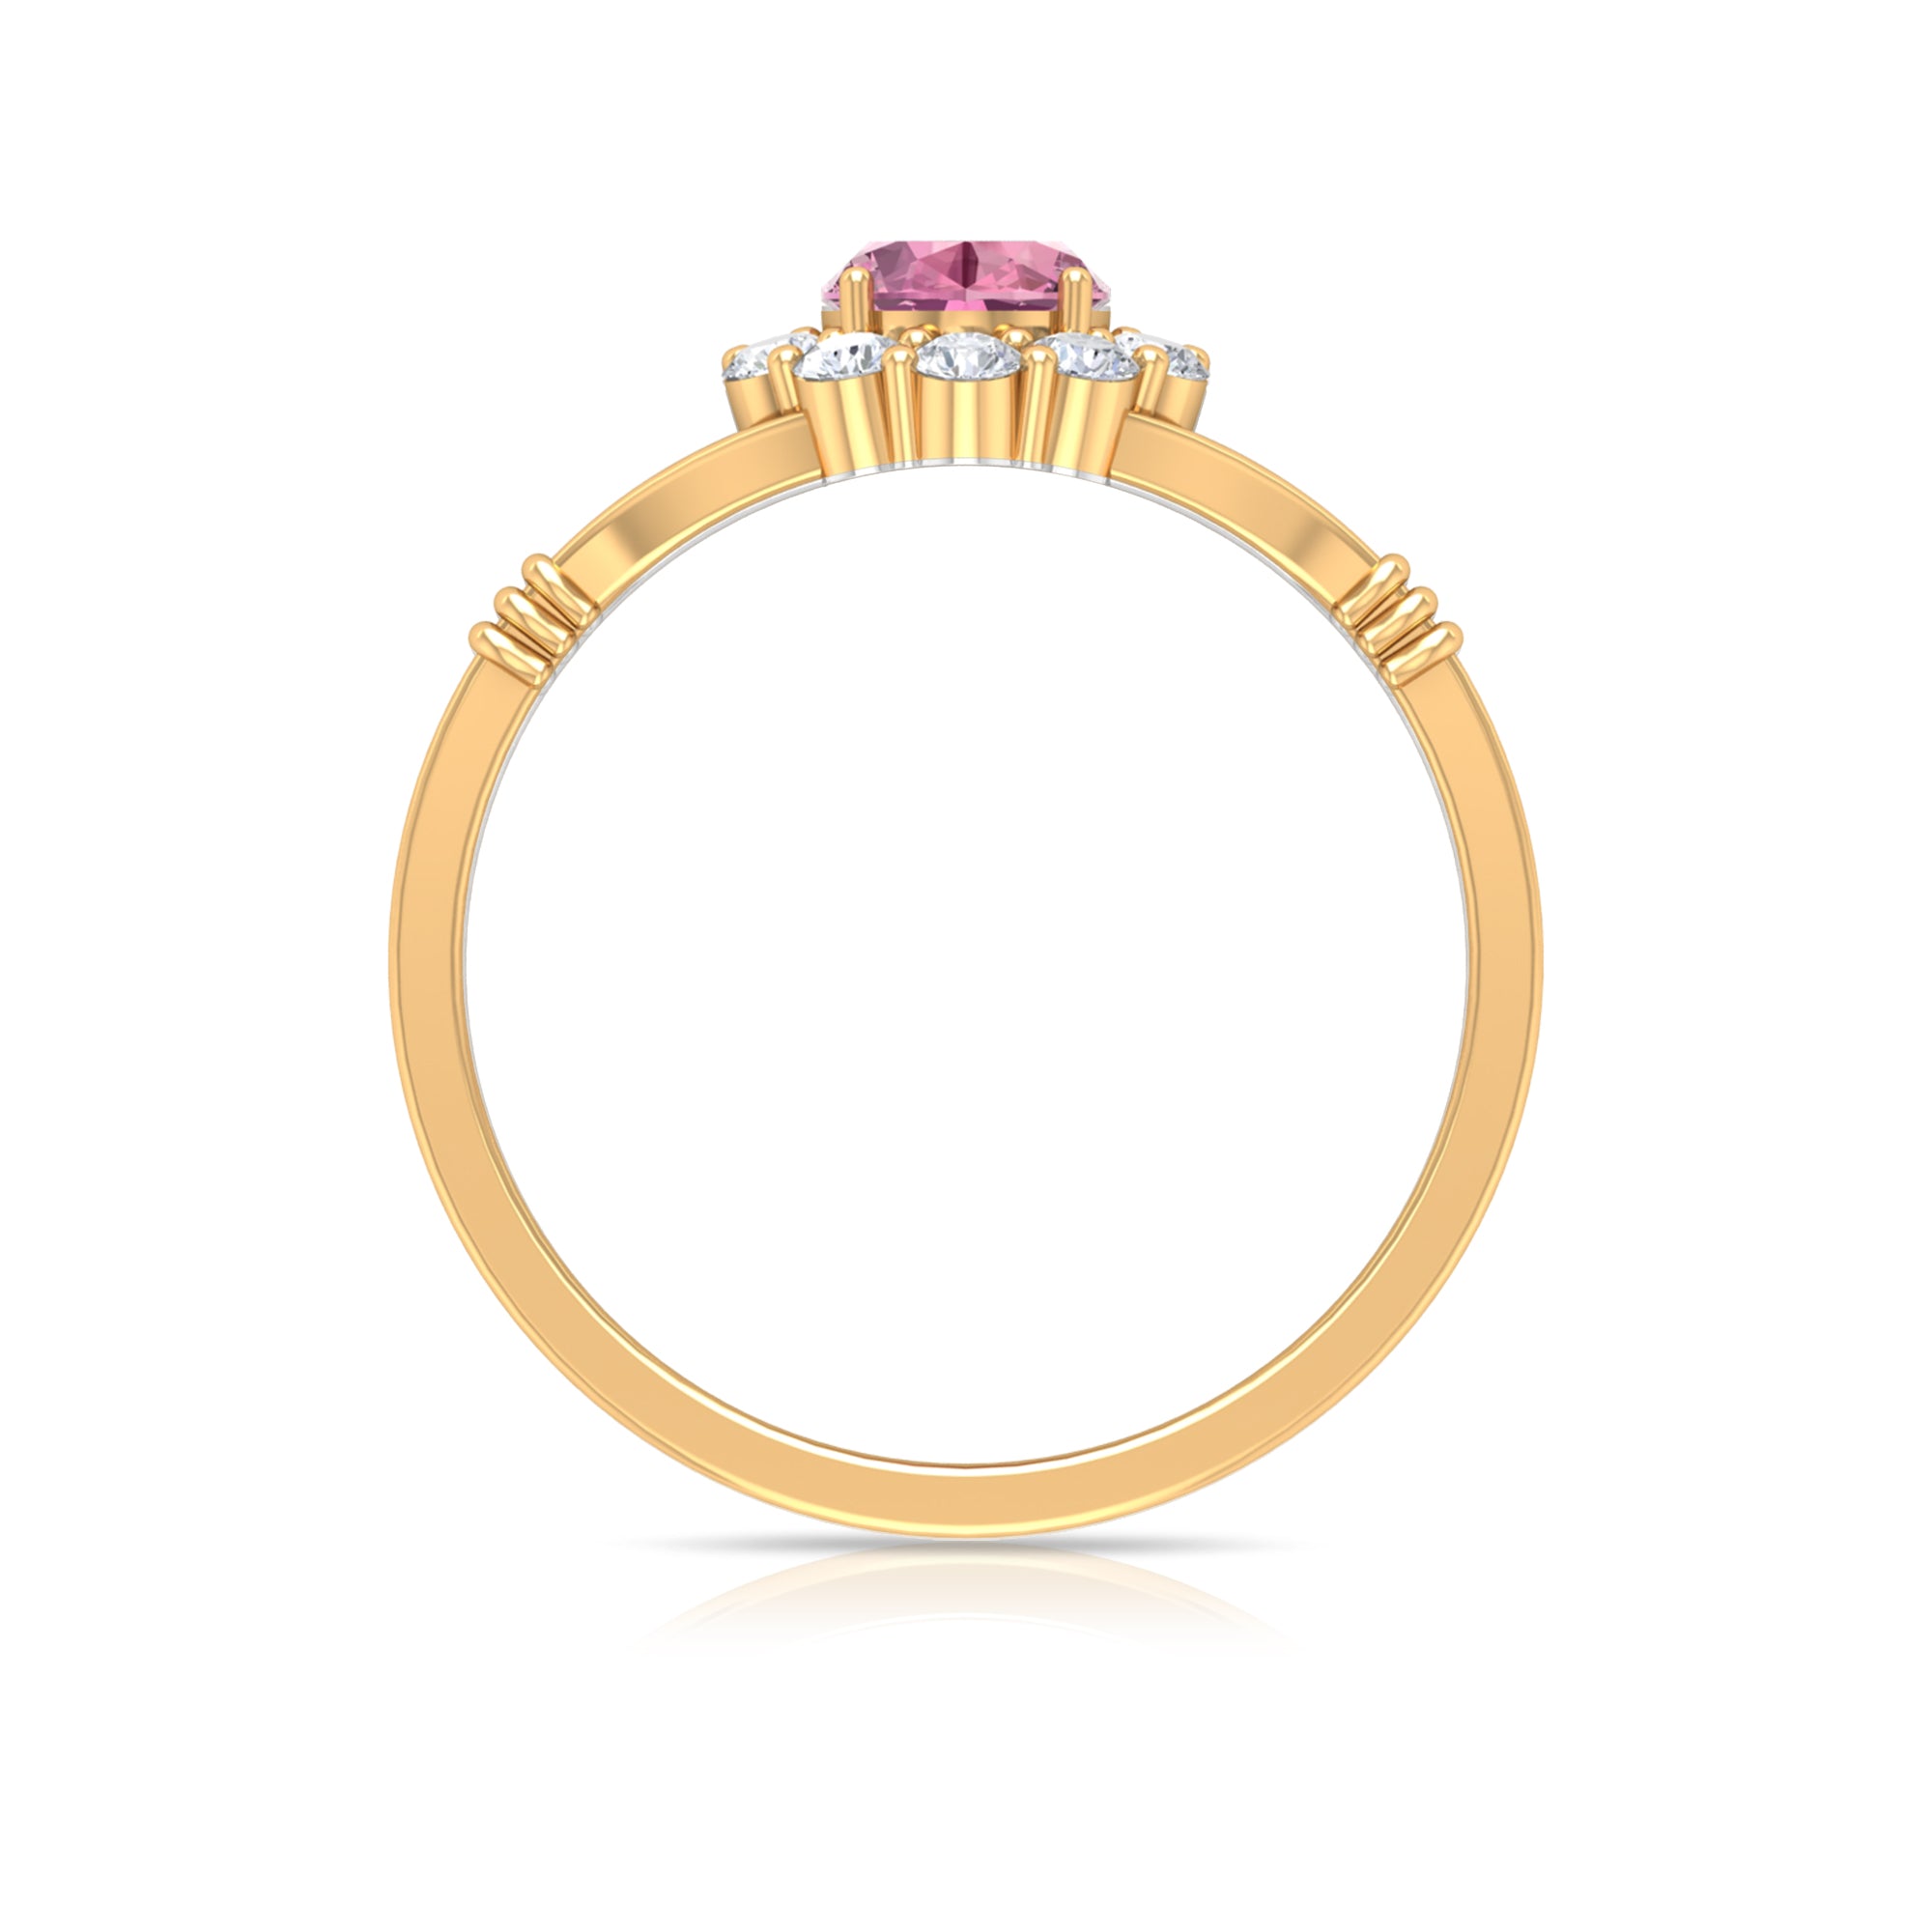 1 CT Pink Tourmaline and Diamond Halo Split Shank Ring Pink Tourmaline - ( AAA ) - Quality - Rosec Jewels